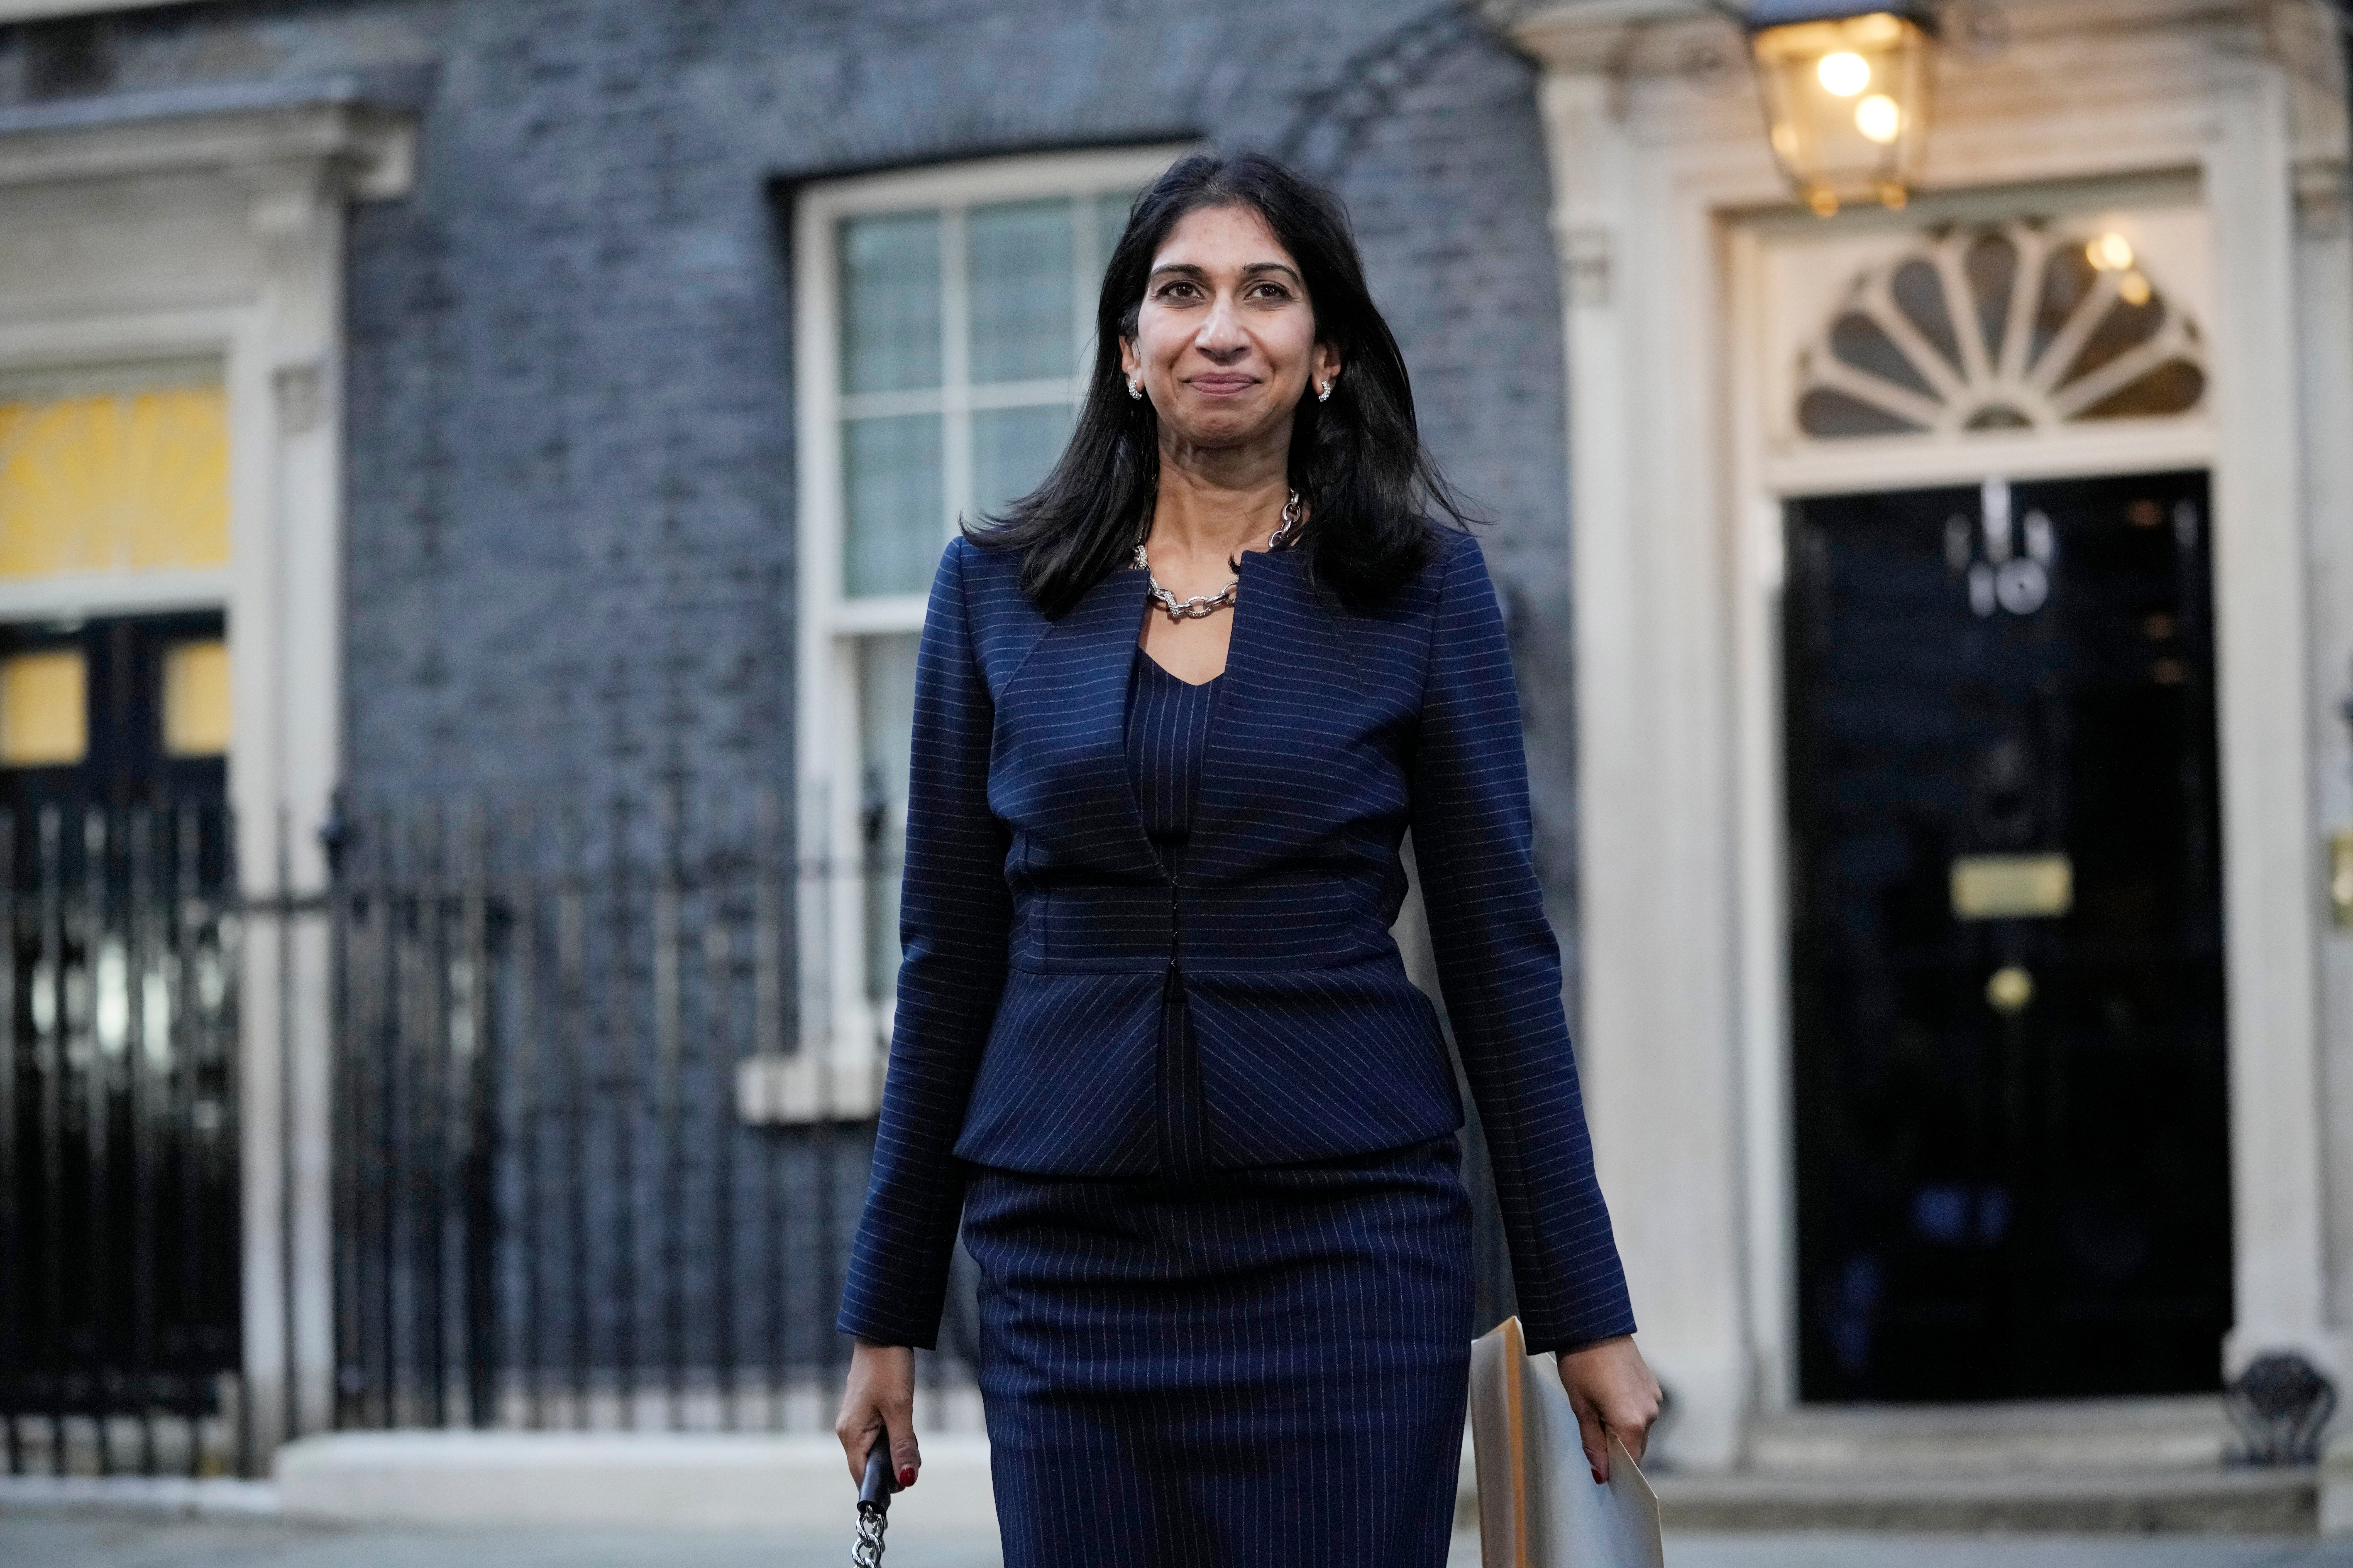 Suella Braverman’s surprise return to Home Secretary was announced Tuesday evening